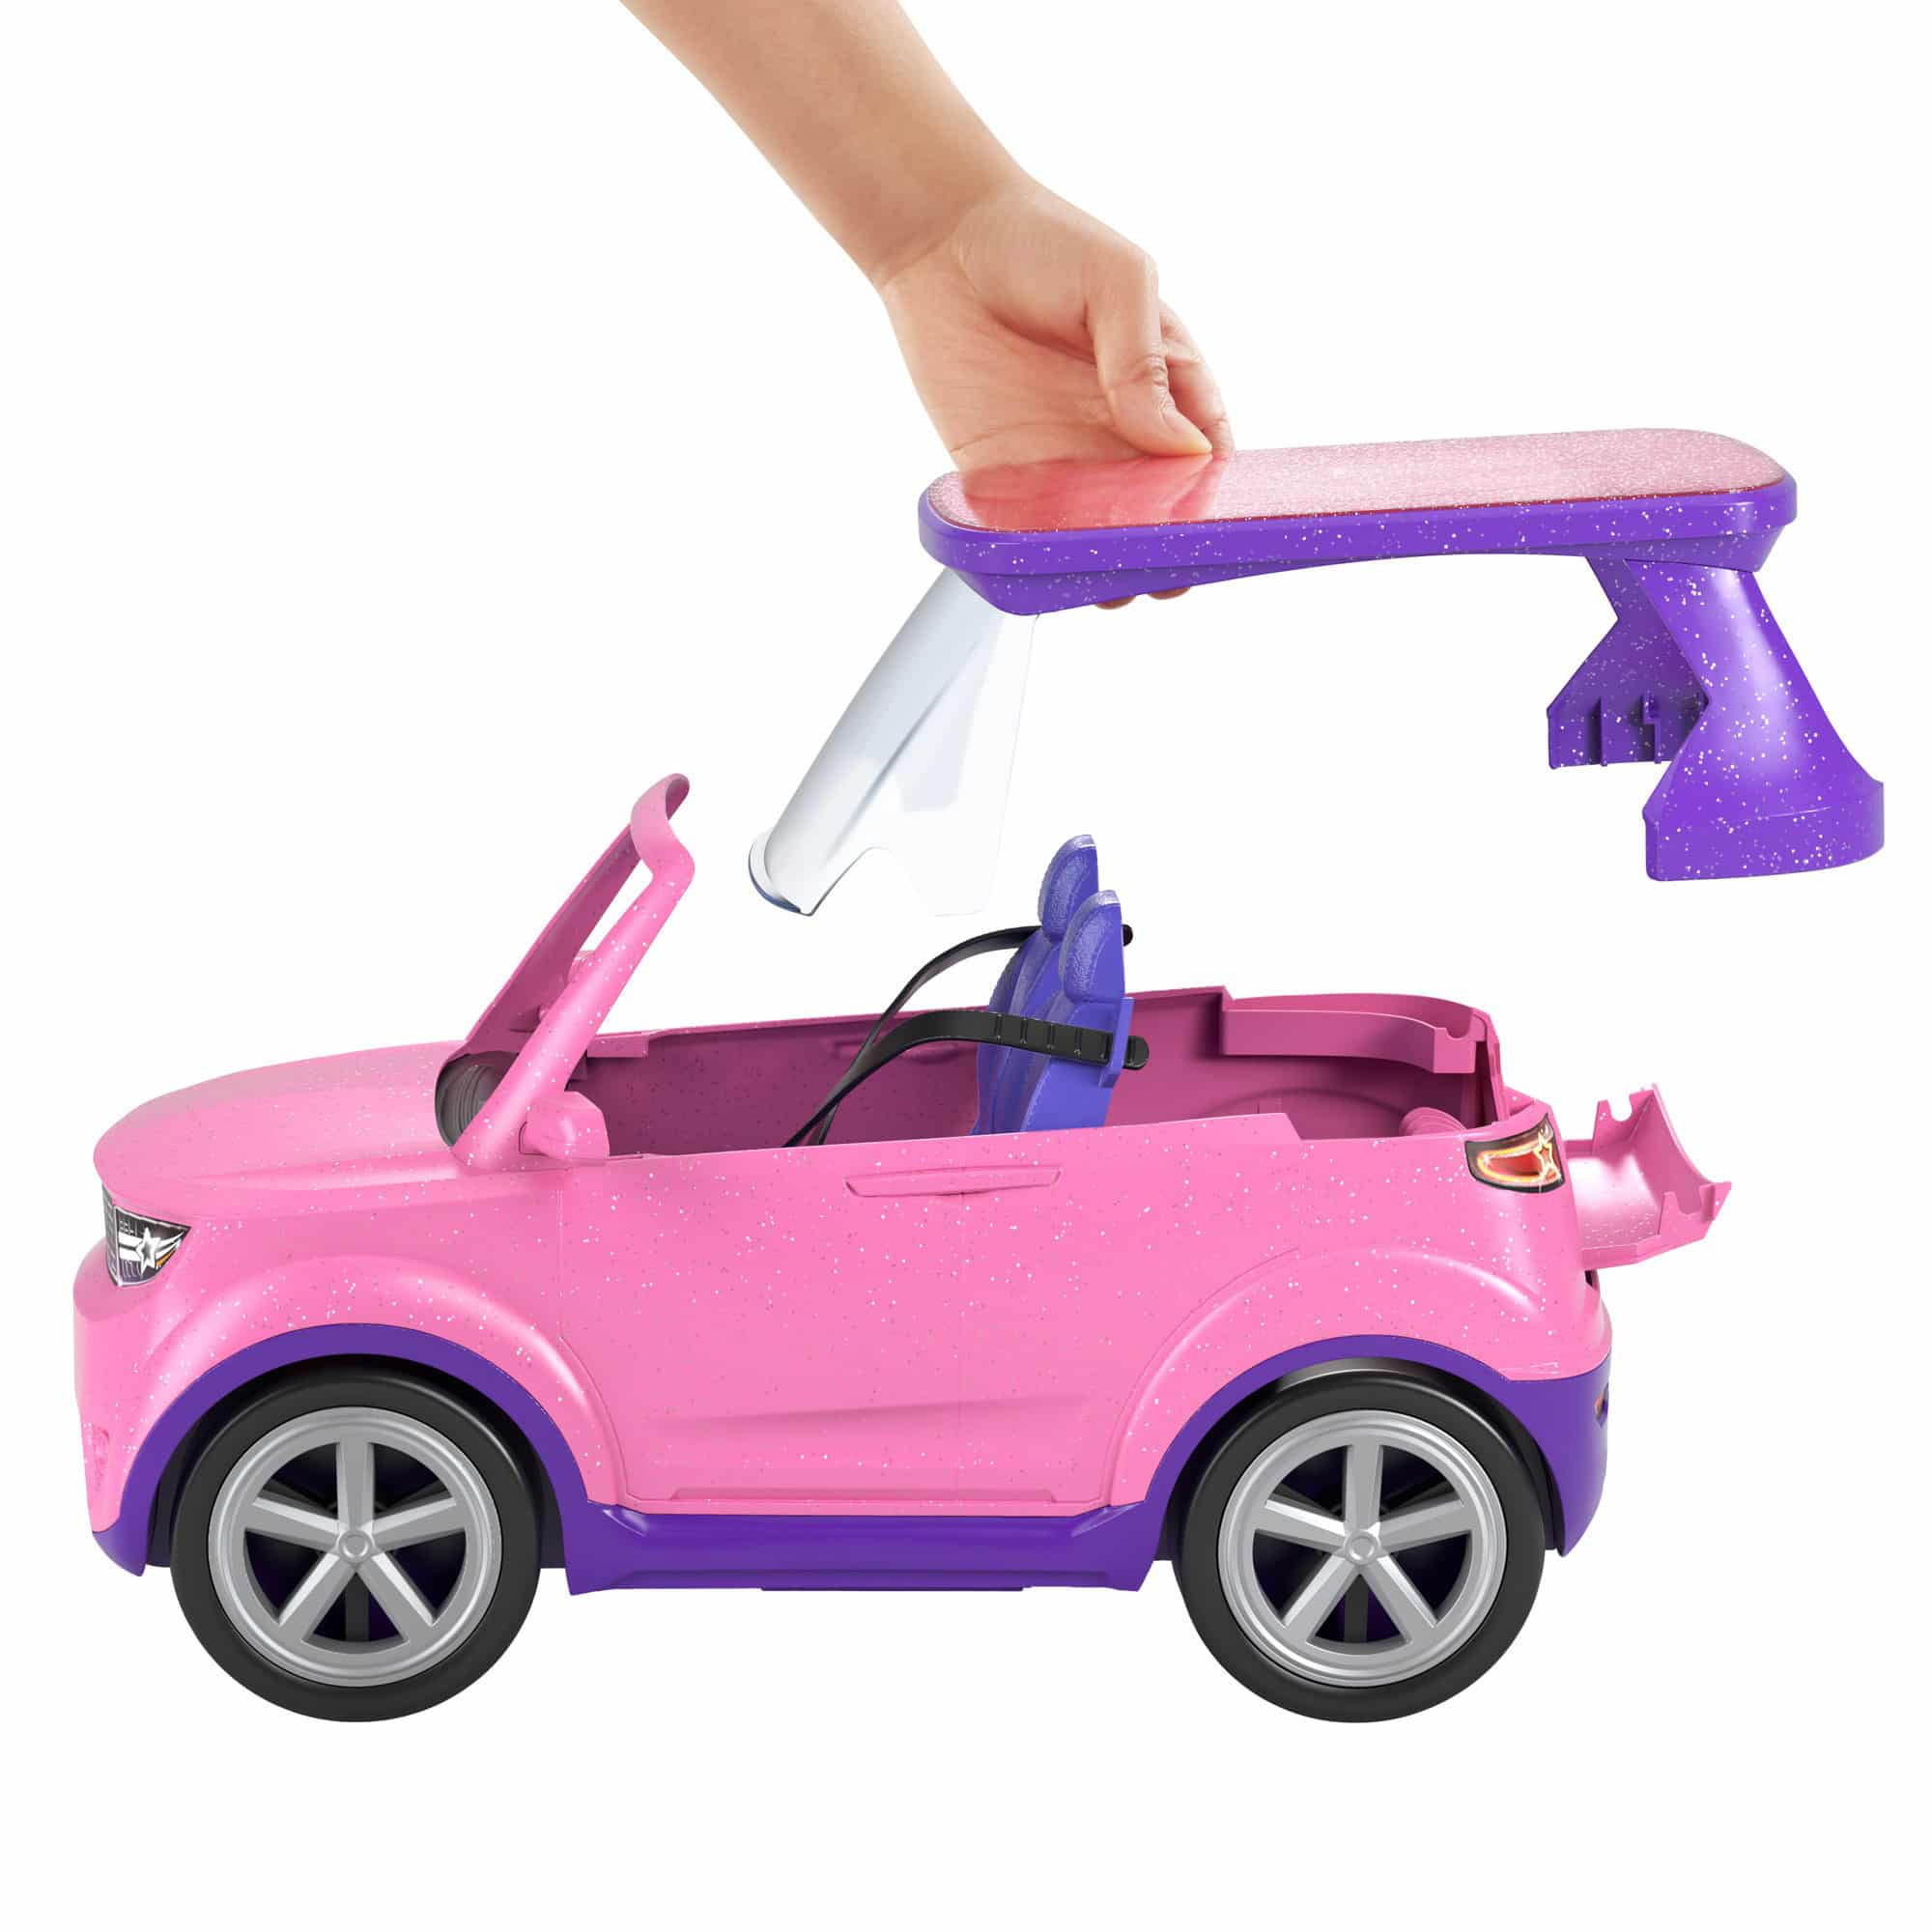 Barbie - Big City Big Dreams - Transforming Vehicle Playset